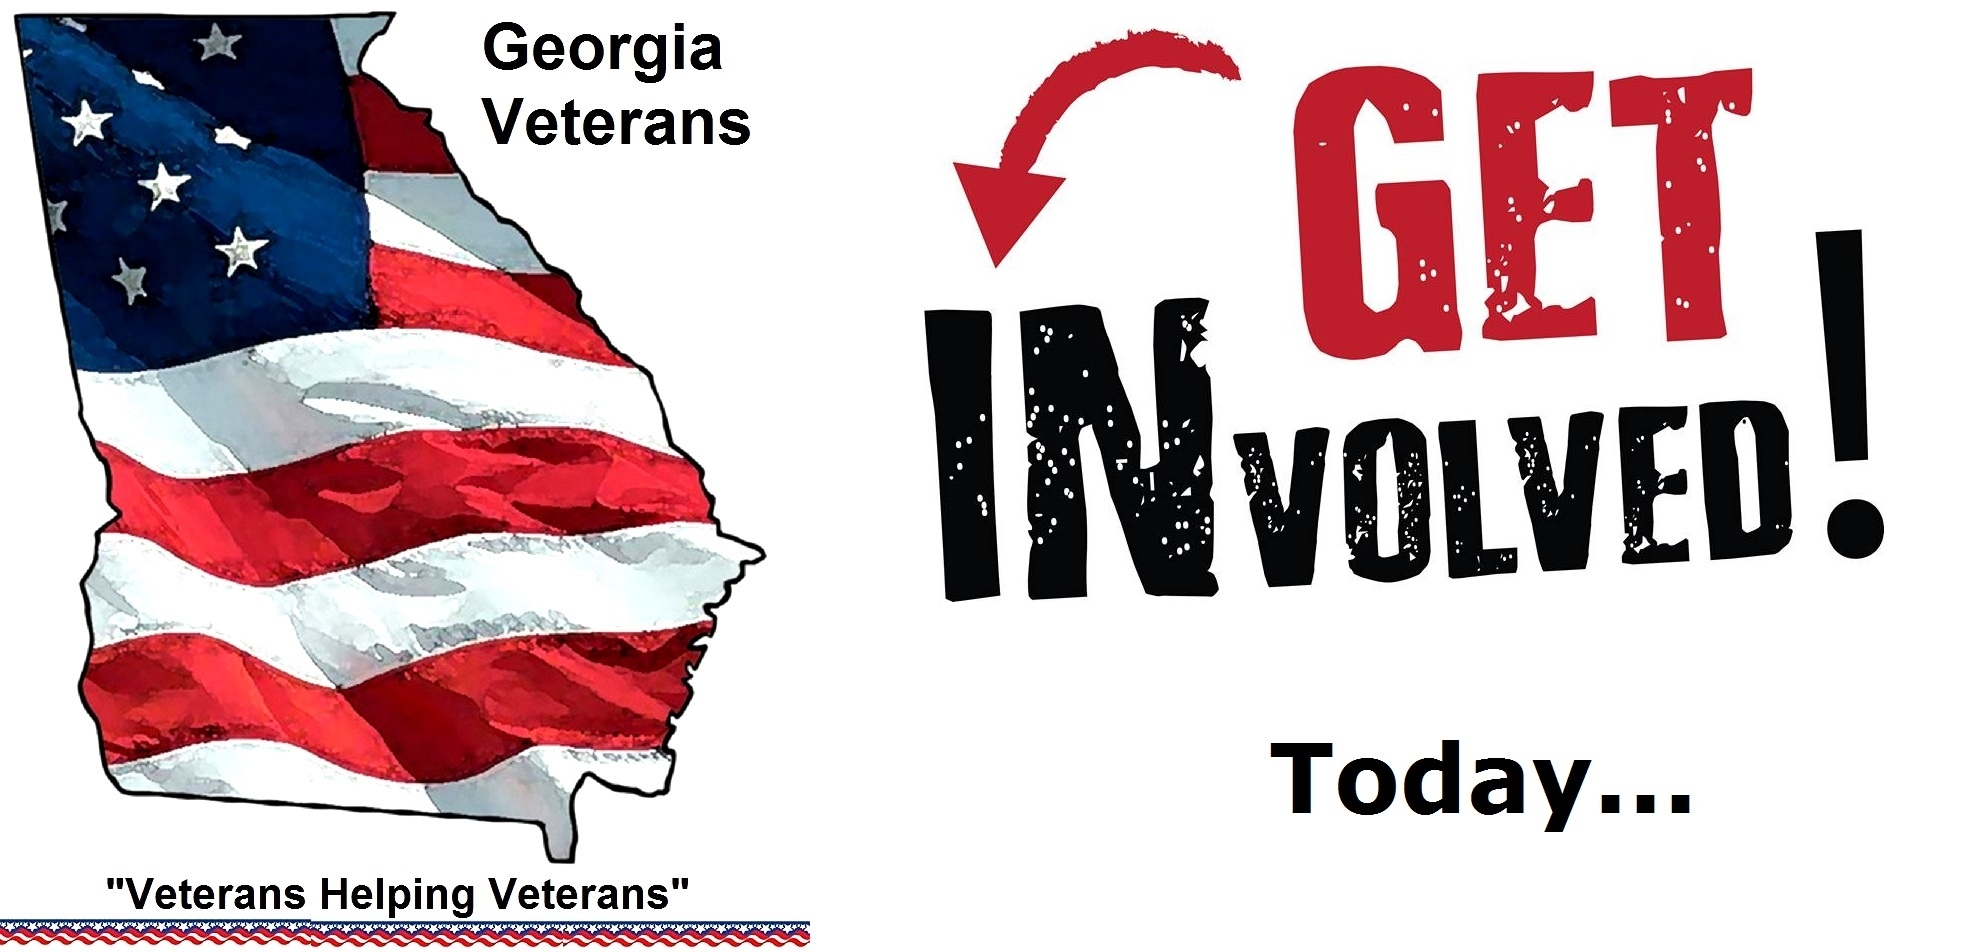 Georgia Veterans Helping Other Veterans